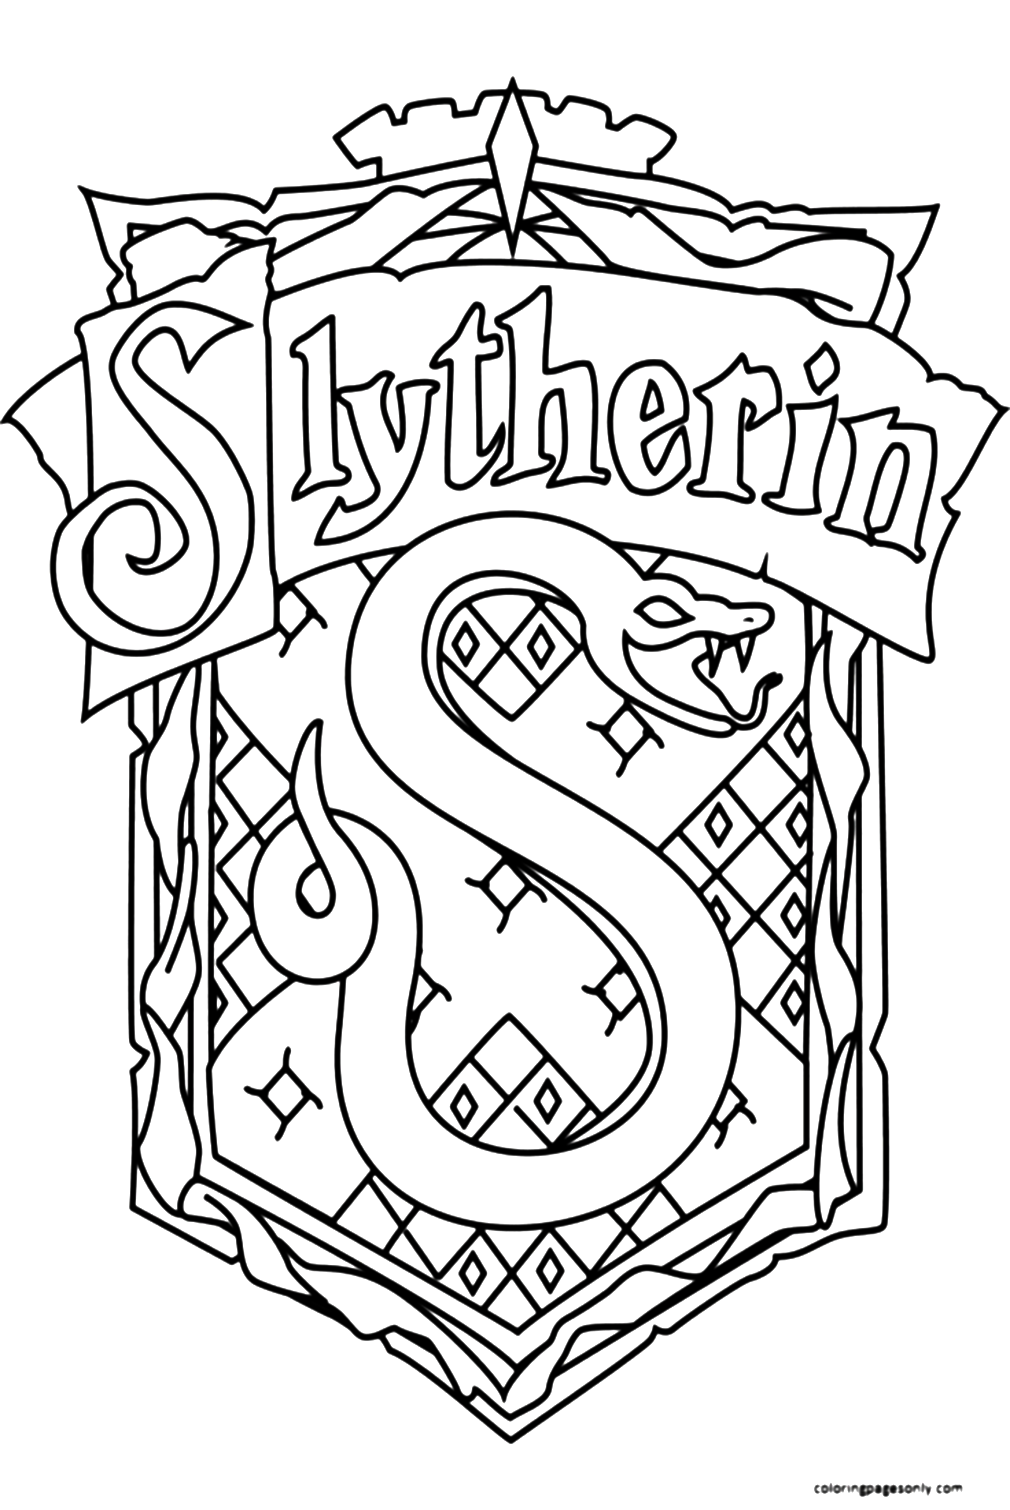 Slytherin Symbol from Harry Potter